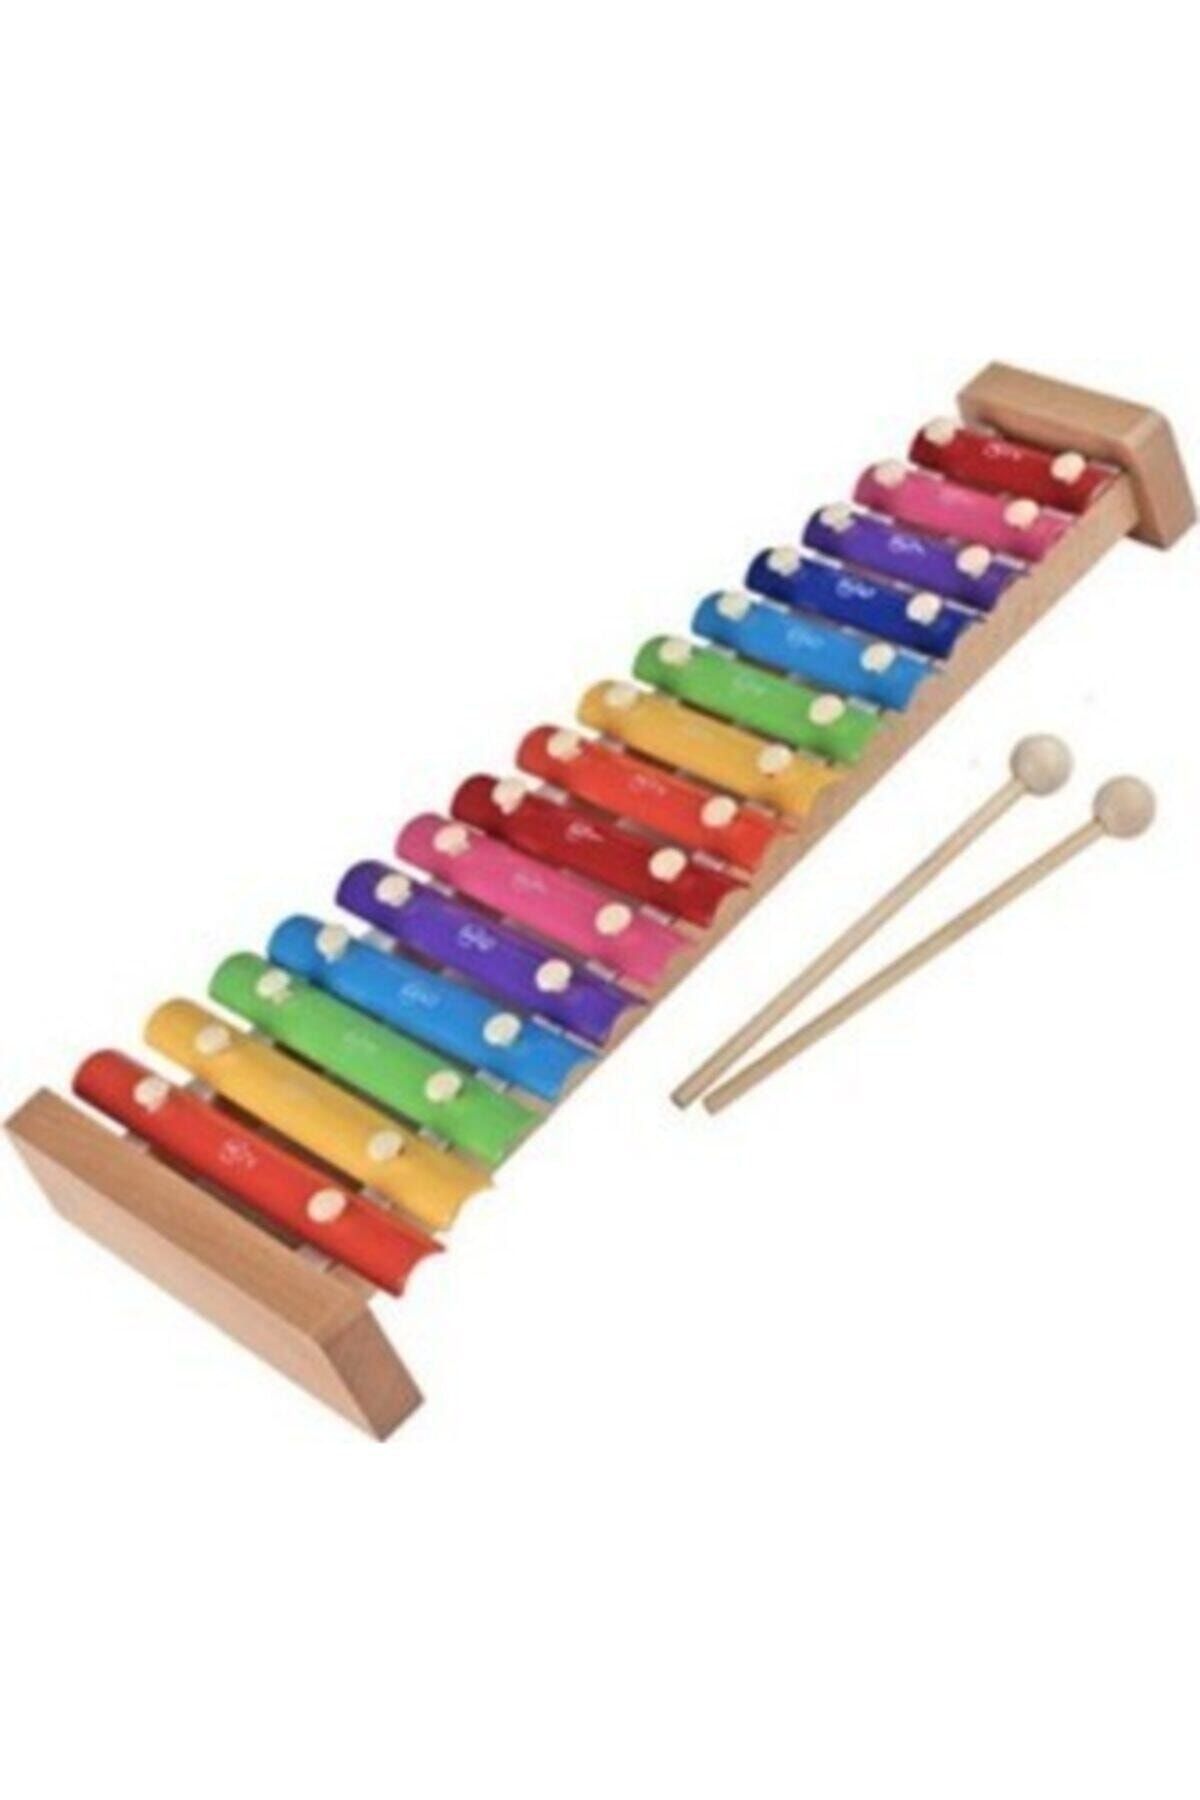 HAMAHA Wooden Toys Percussion Instrument 15 Tones Ksilofon